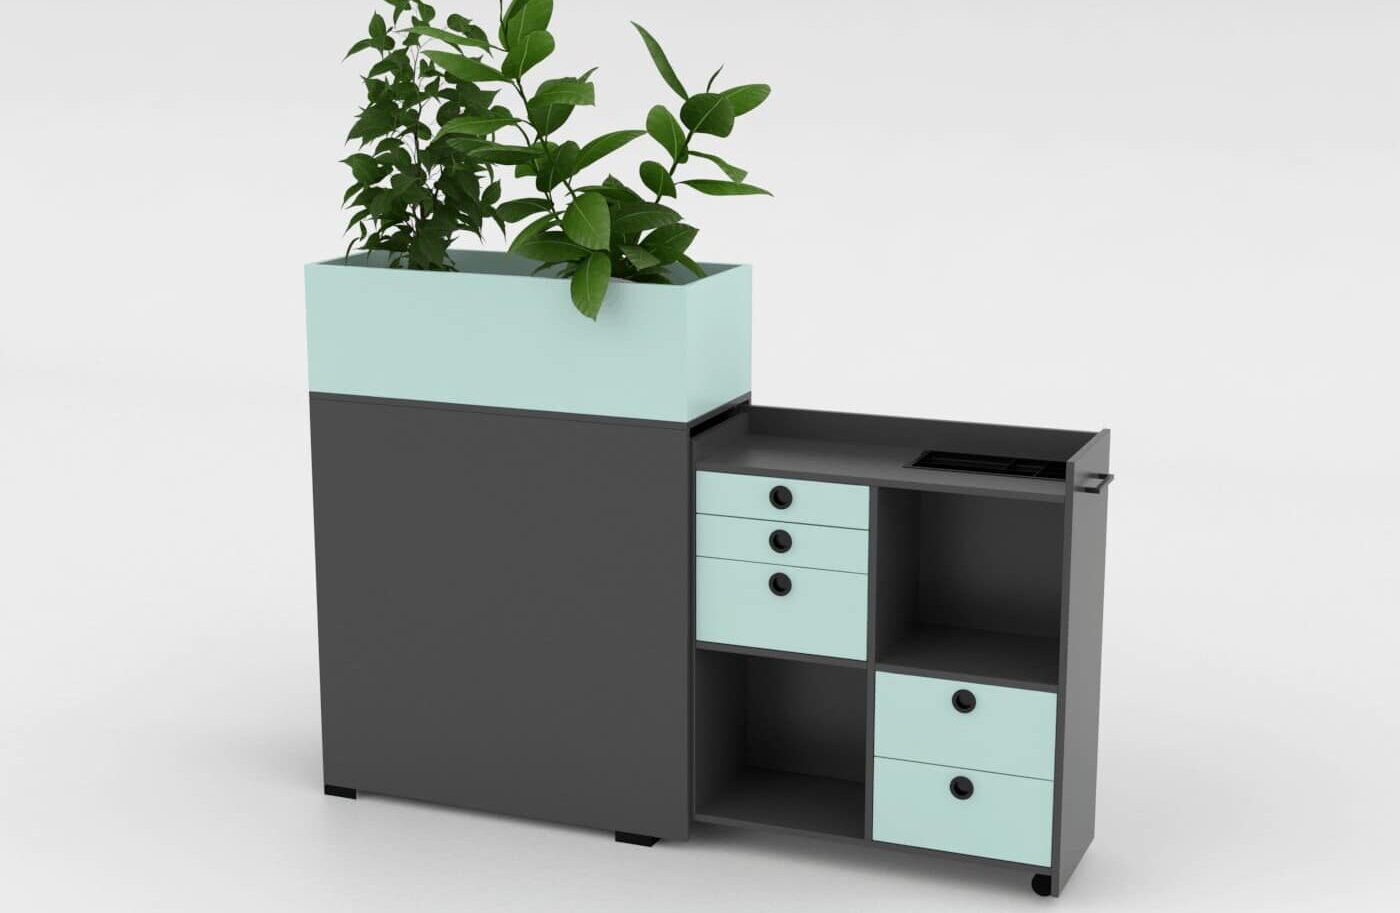 Cube Design flower box projectmeubilair